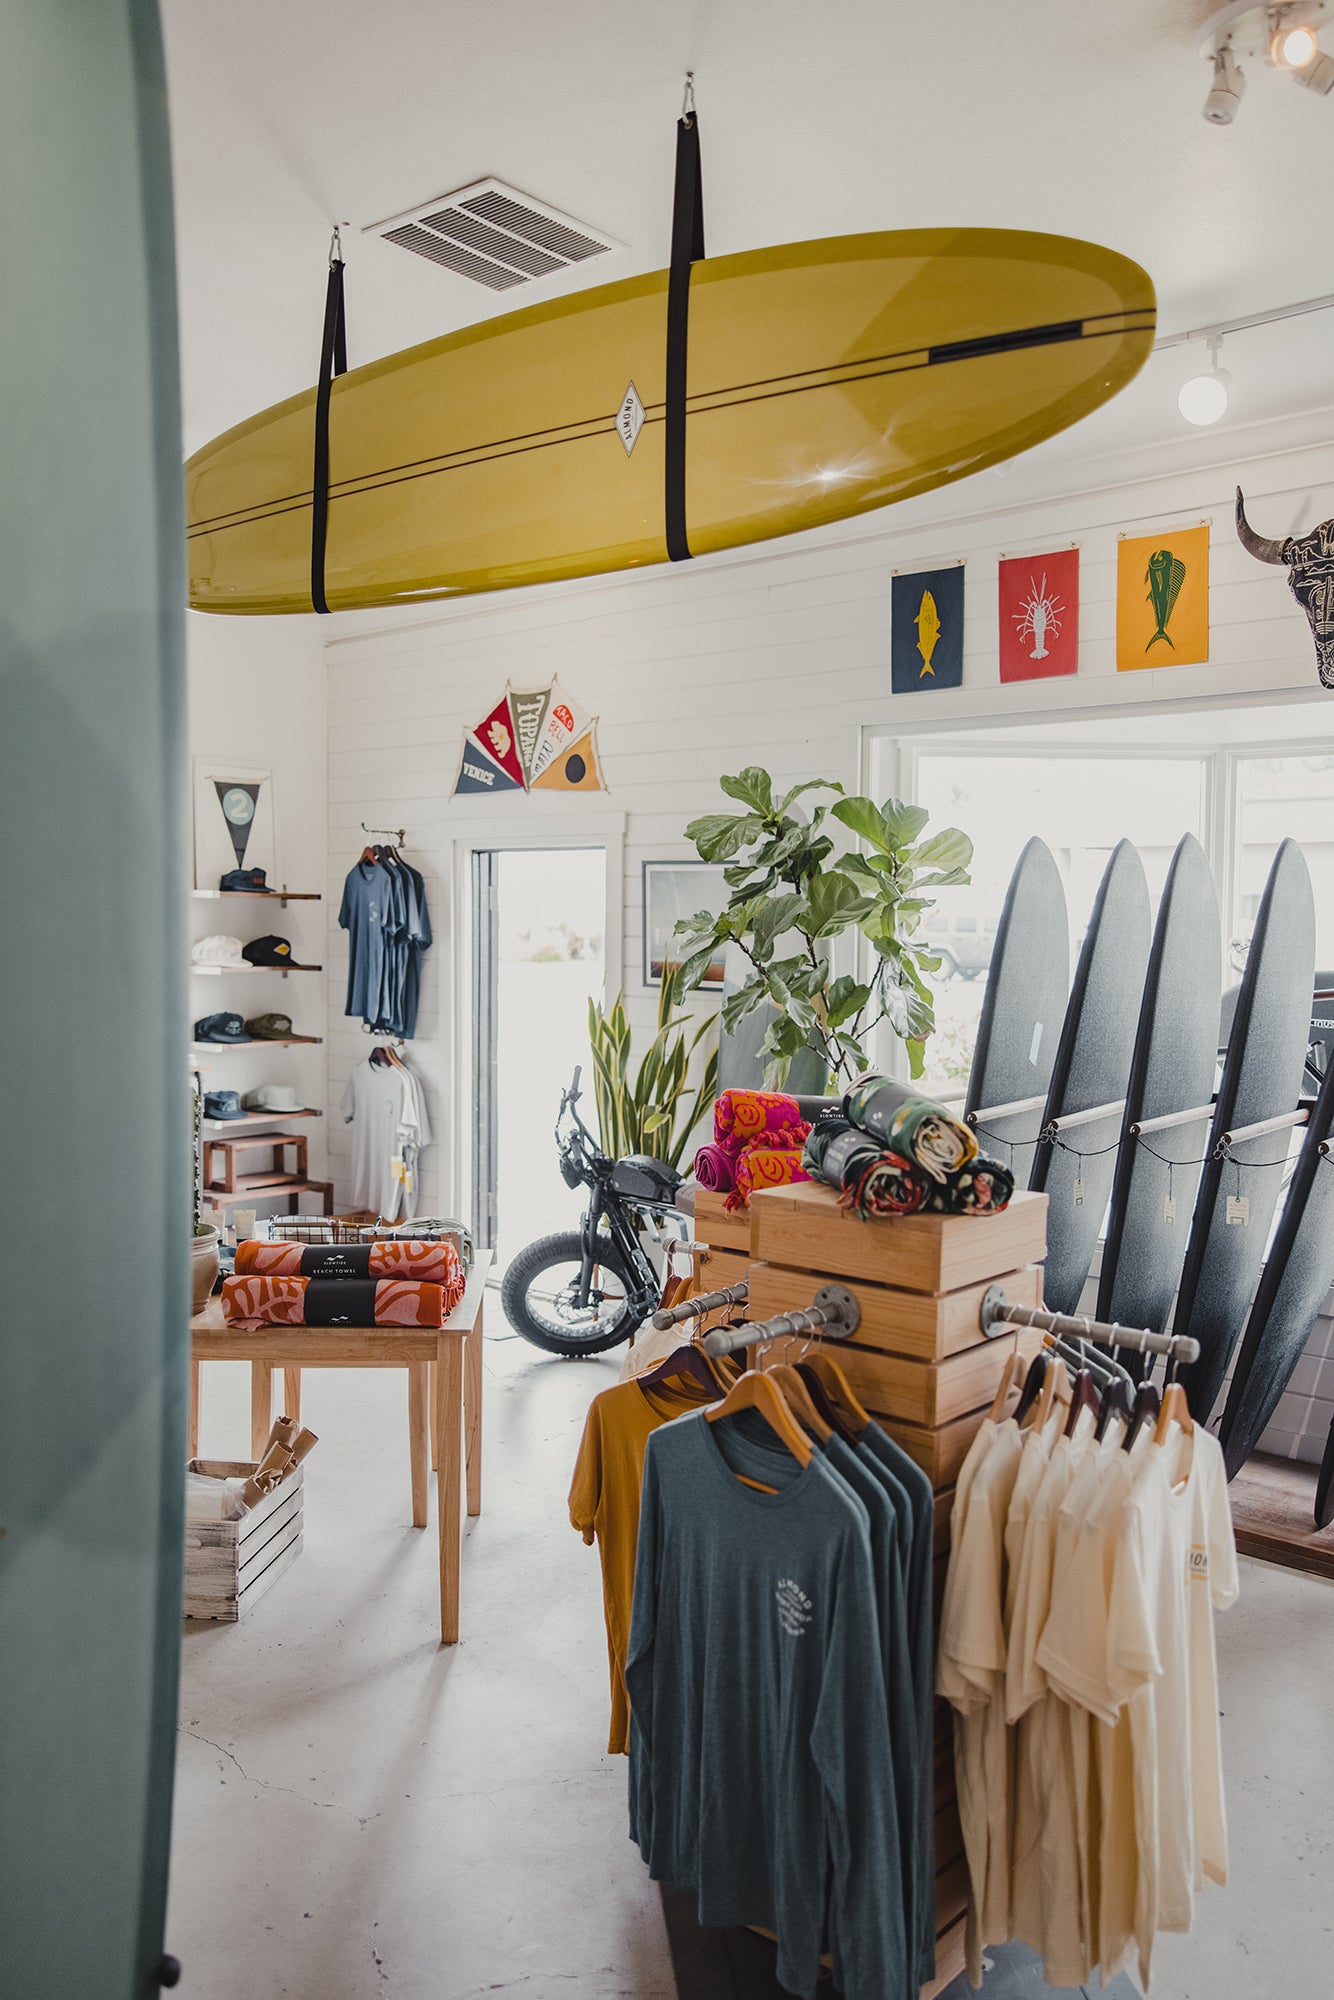 Surf Shop View: August 2021 | Almond Surfboards & Designs